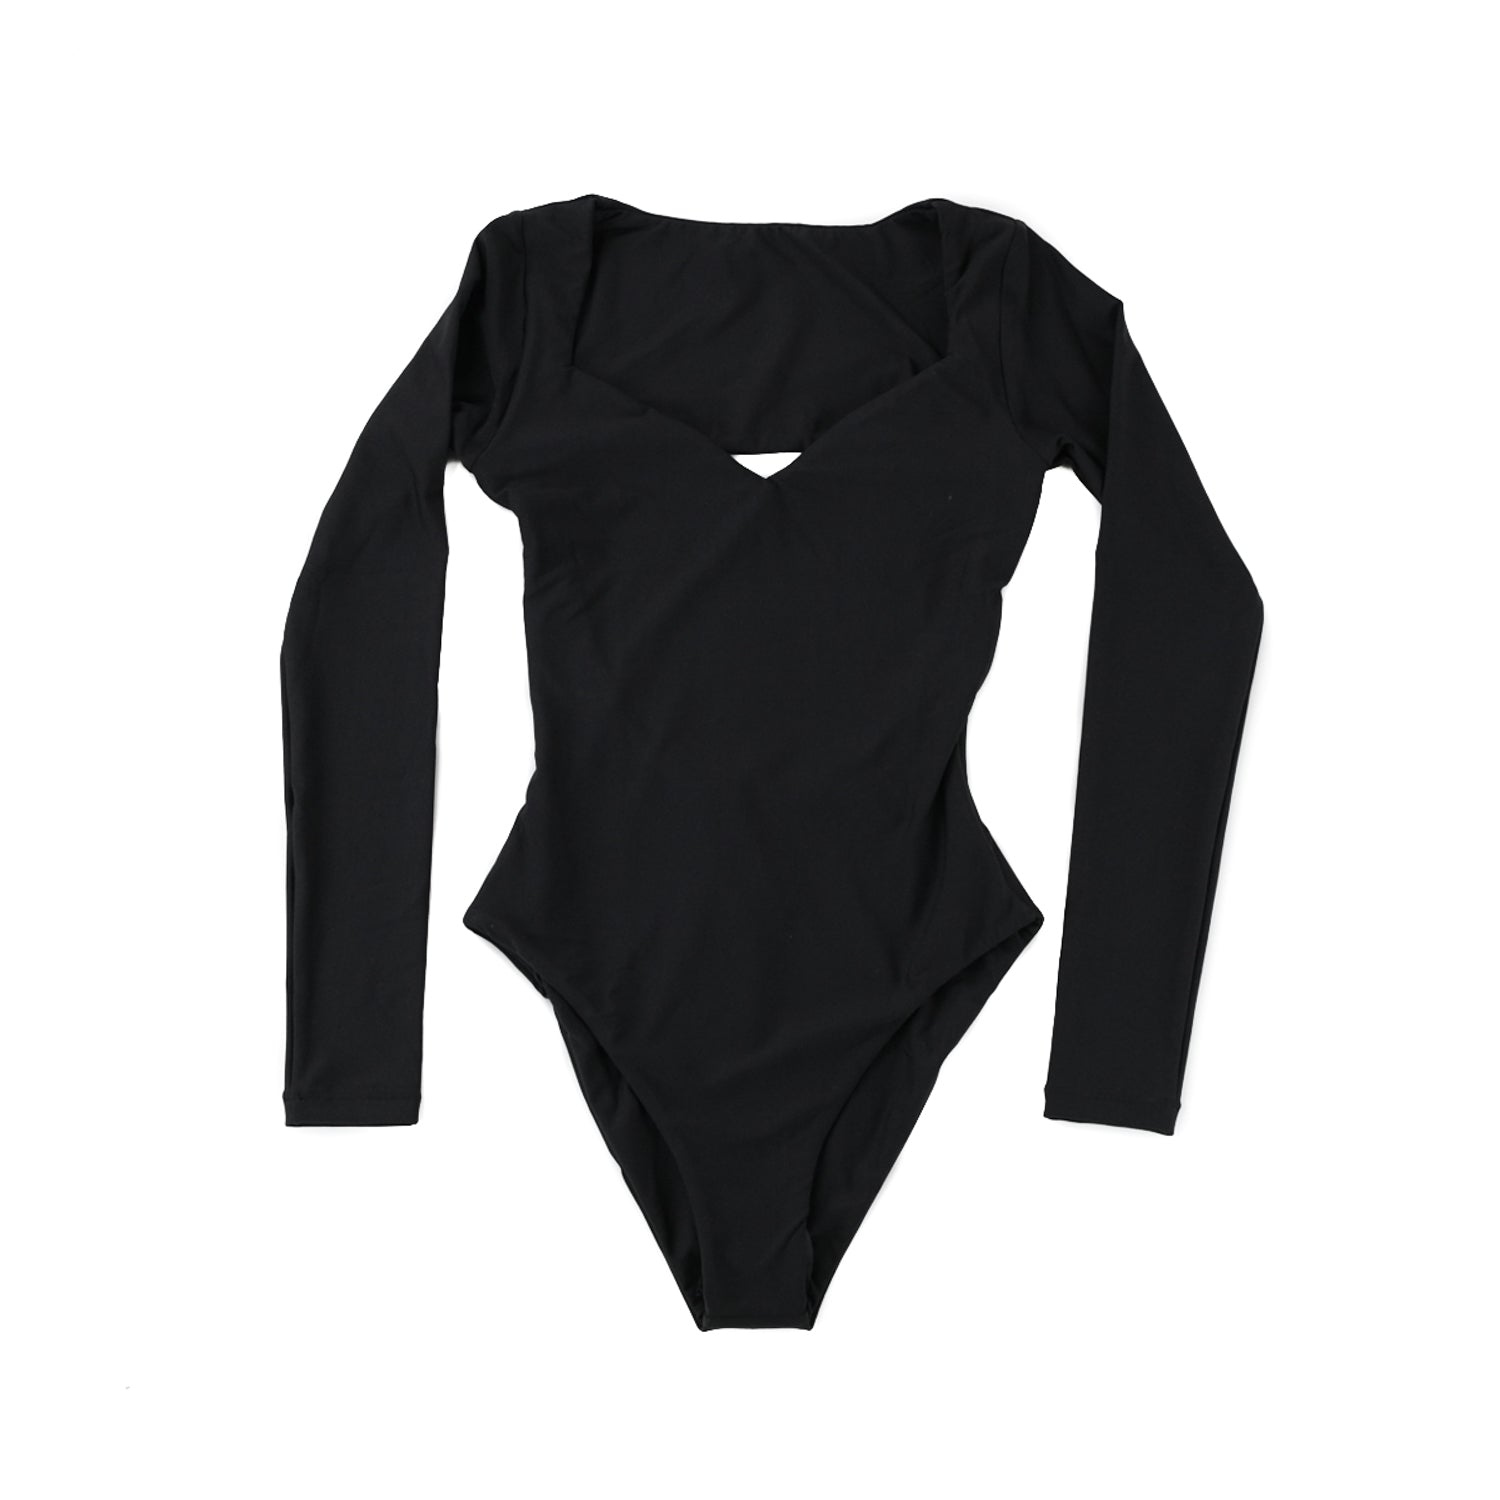 Simply Seamless Bodysuit - Black